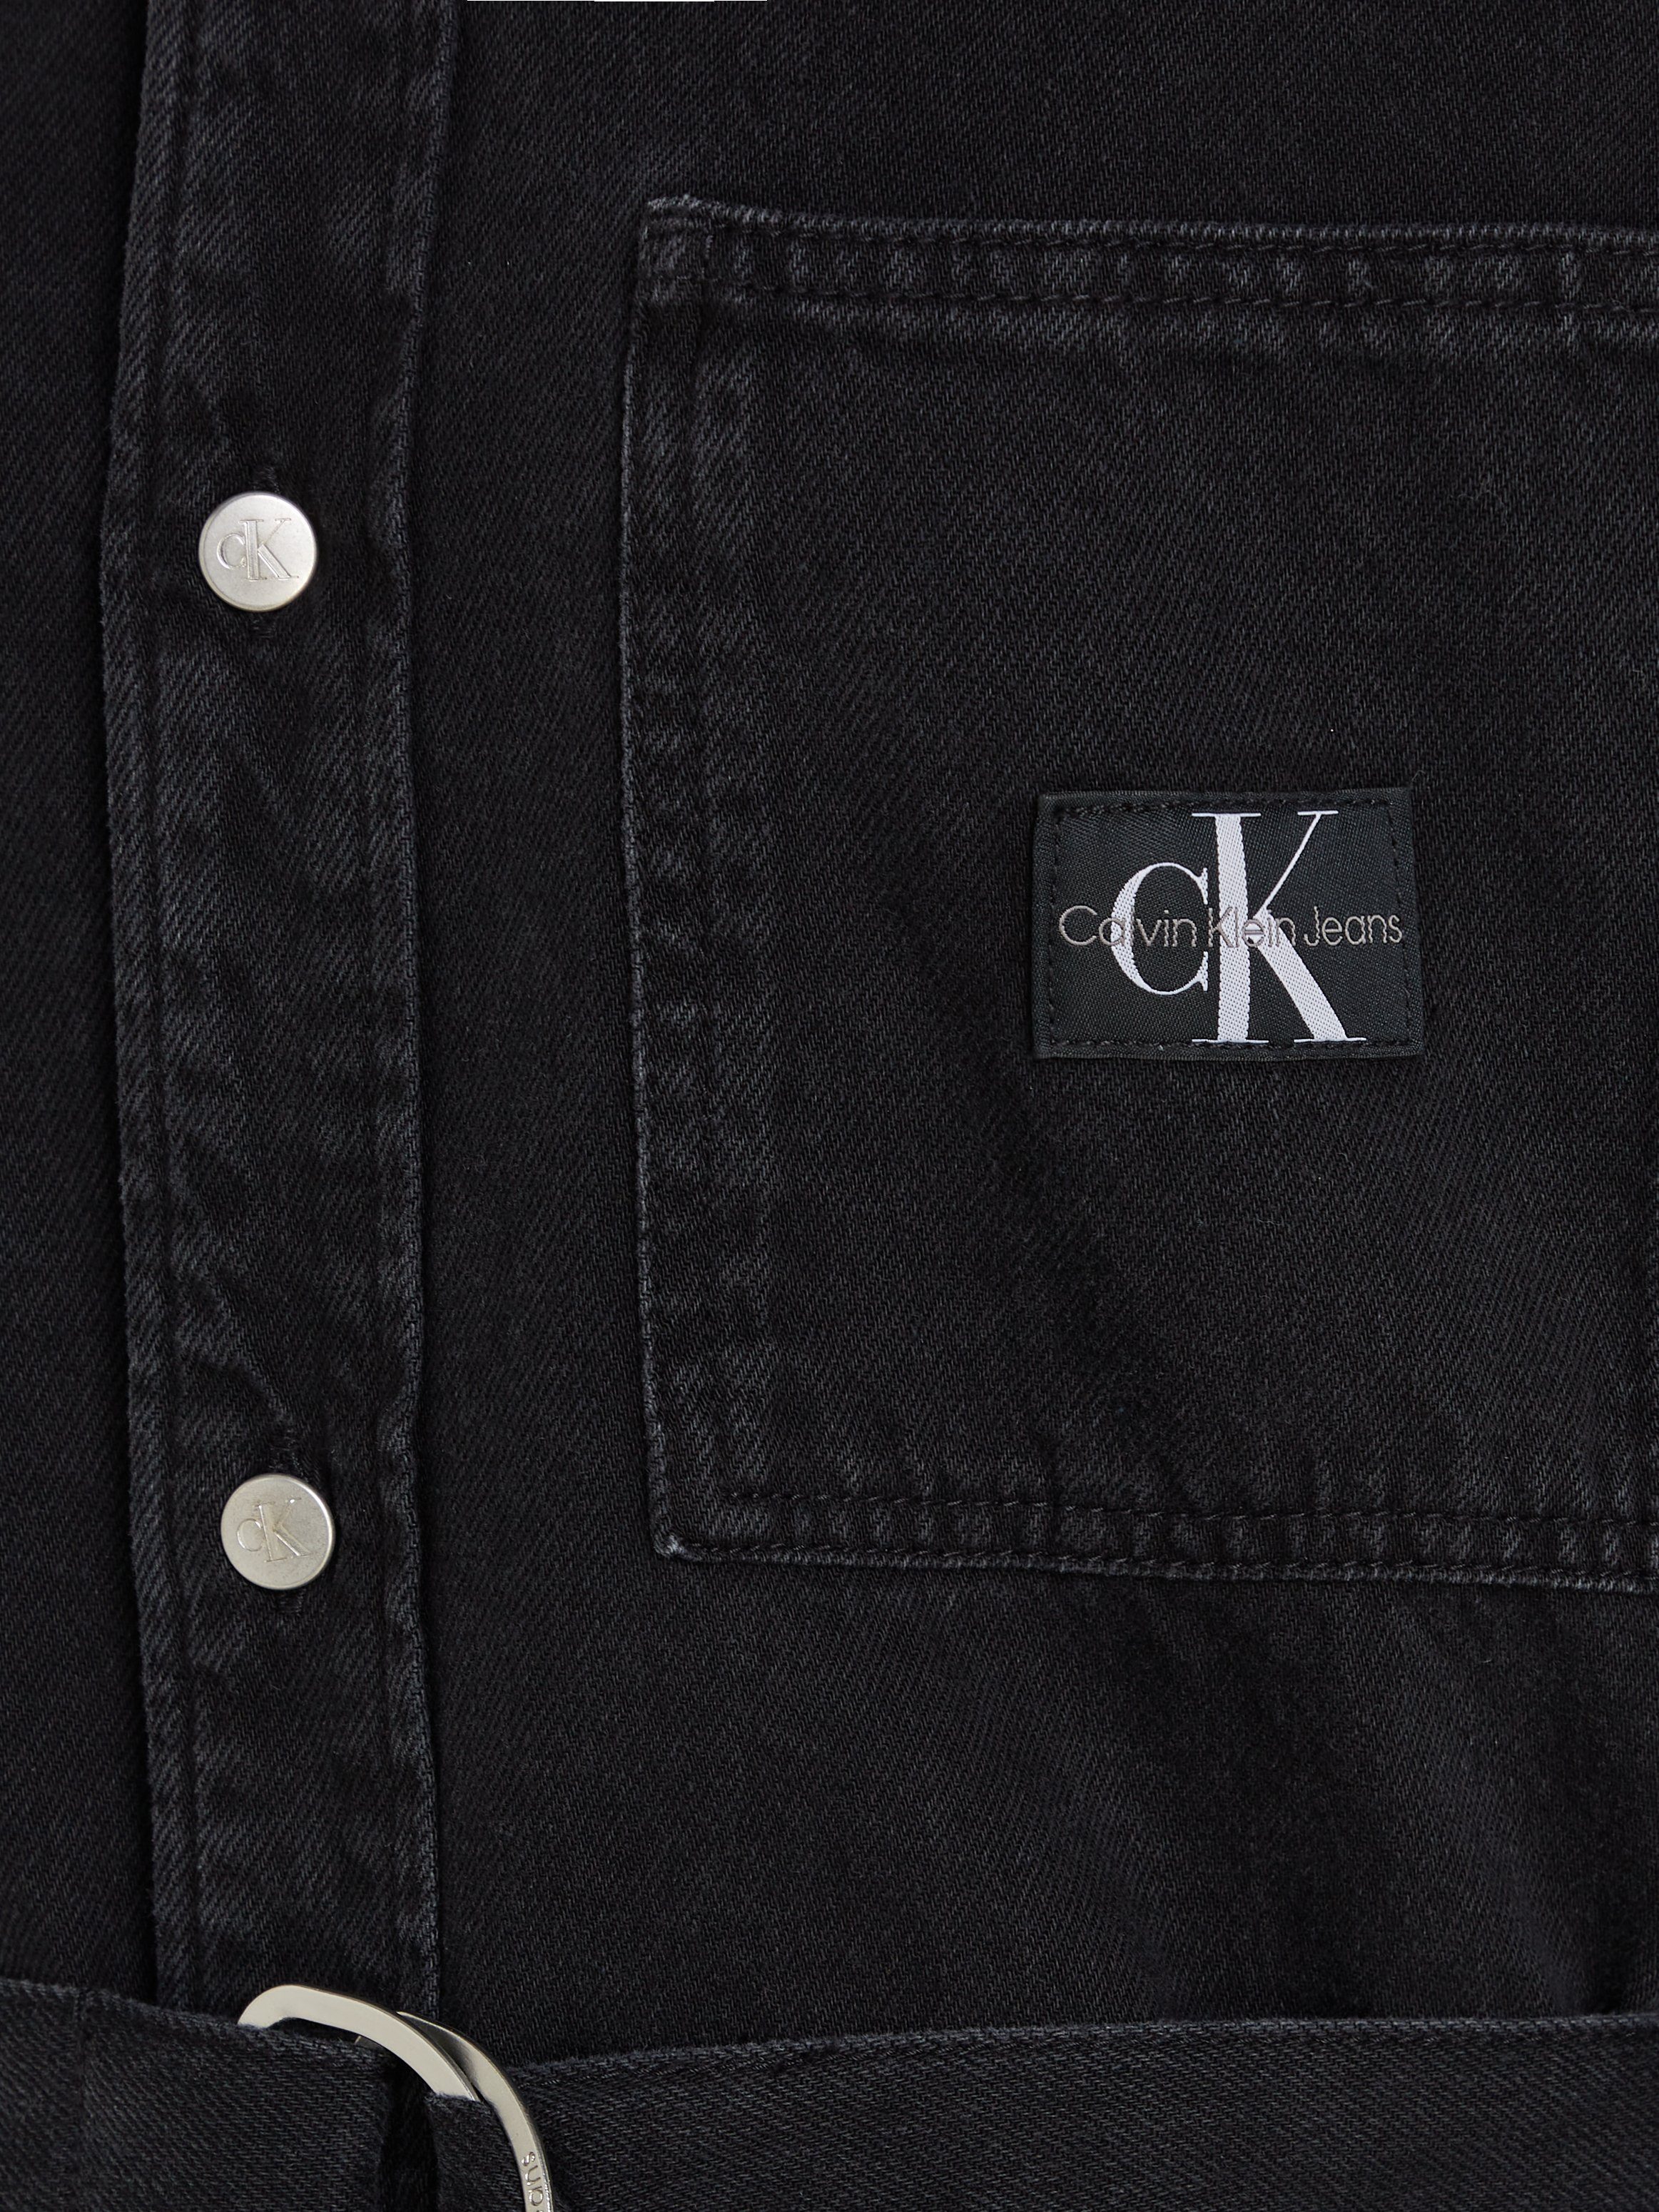 UTILITY DENIM Jeans Jeanskleid SHIRT Calvin BELTED Klein DRESS